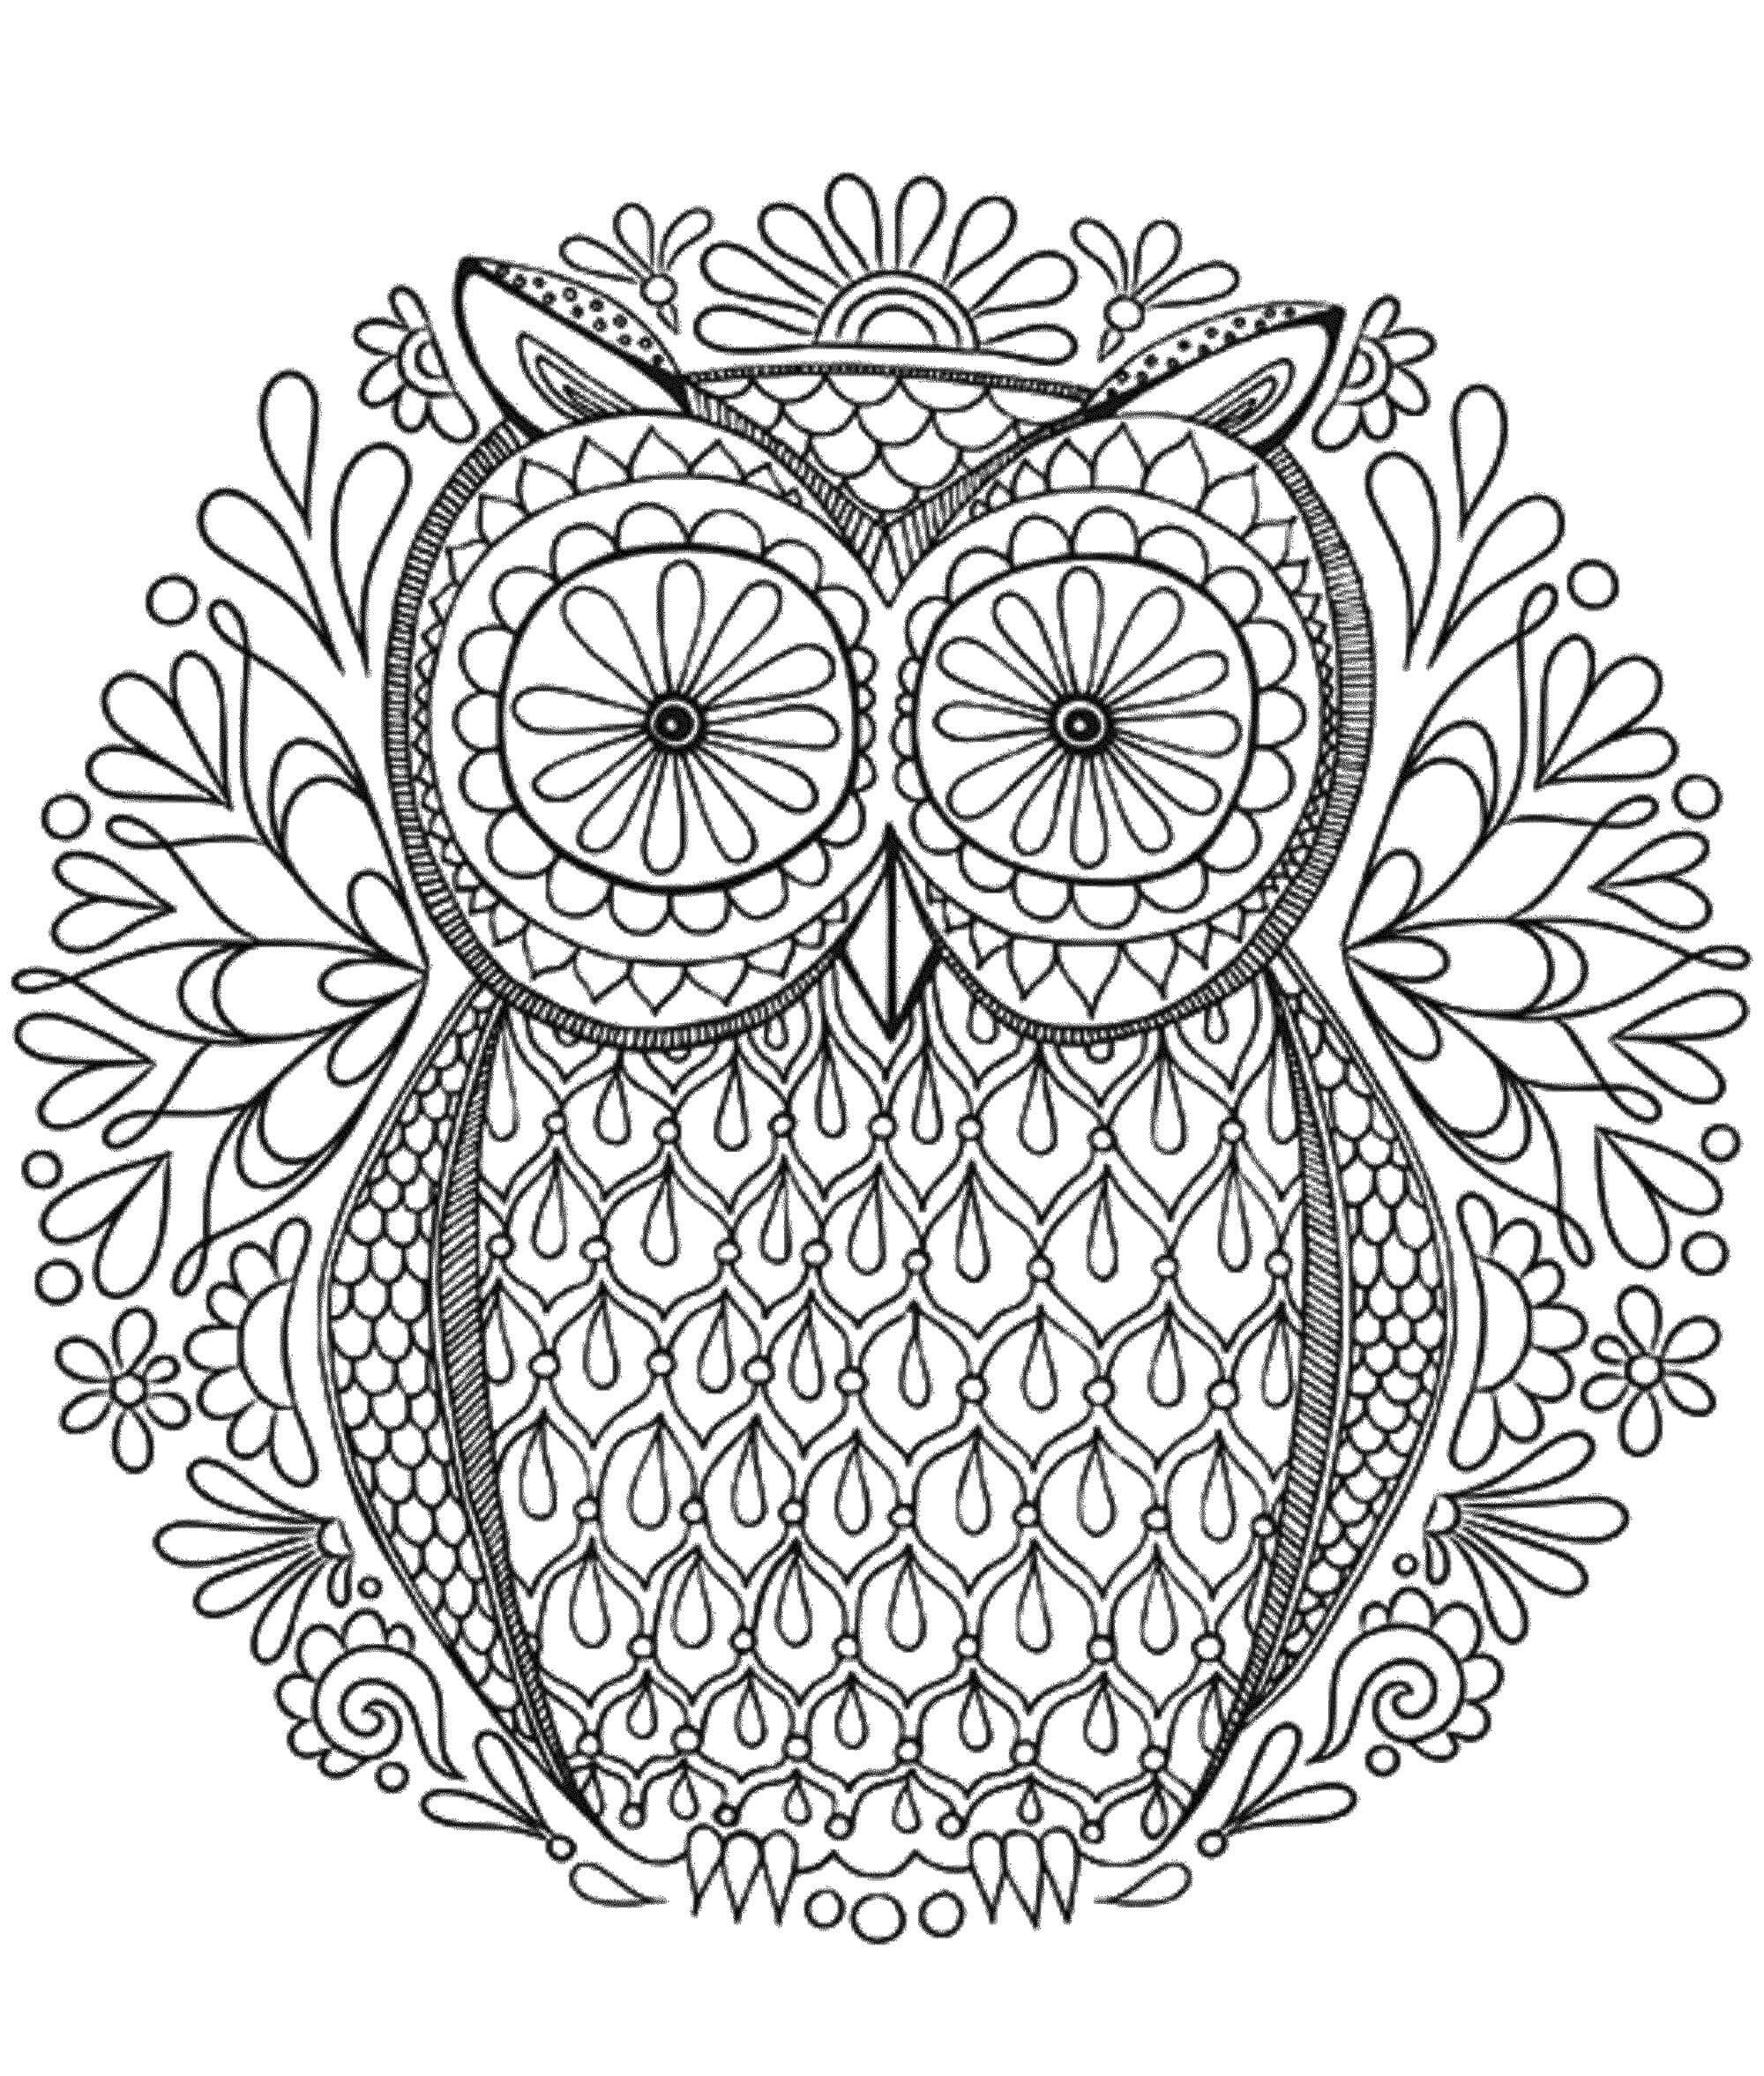 Mandala Owl With Big Eyes Coloring Page Mandalas